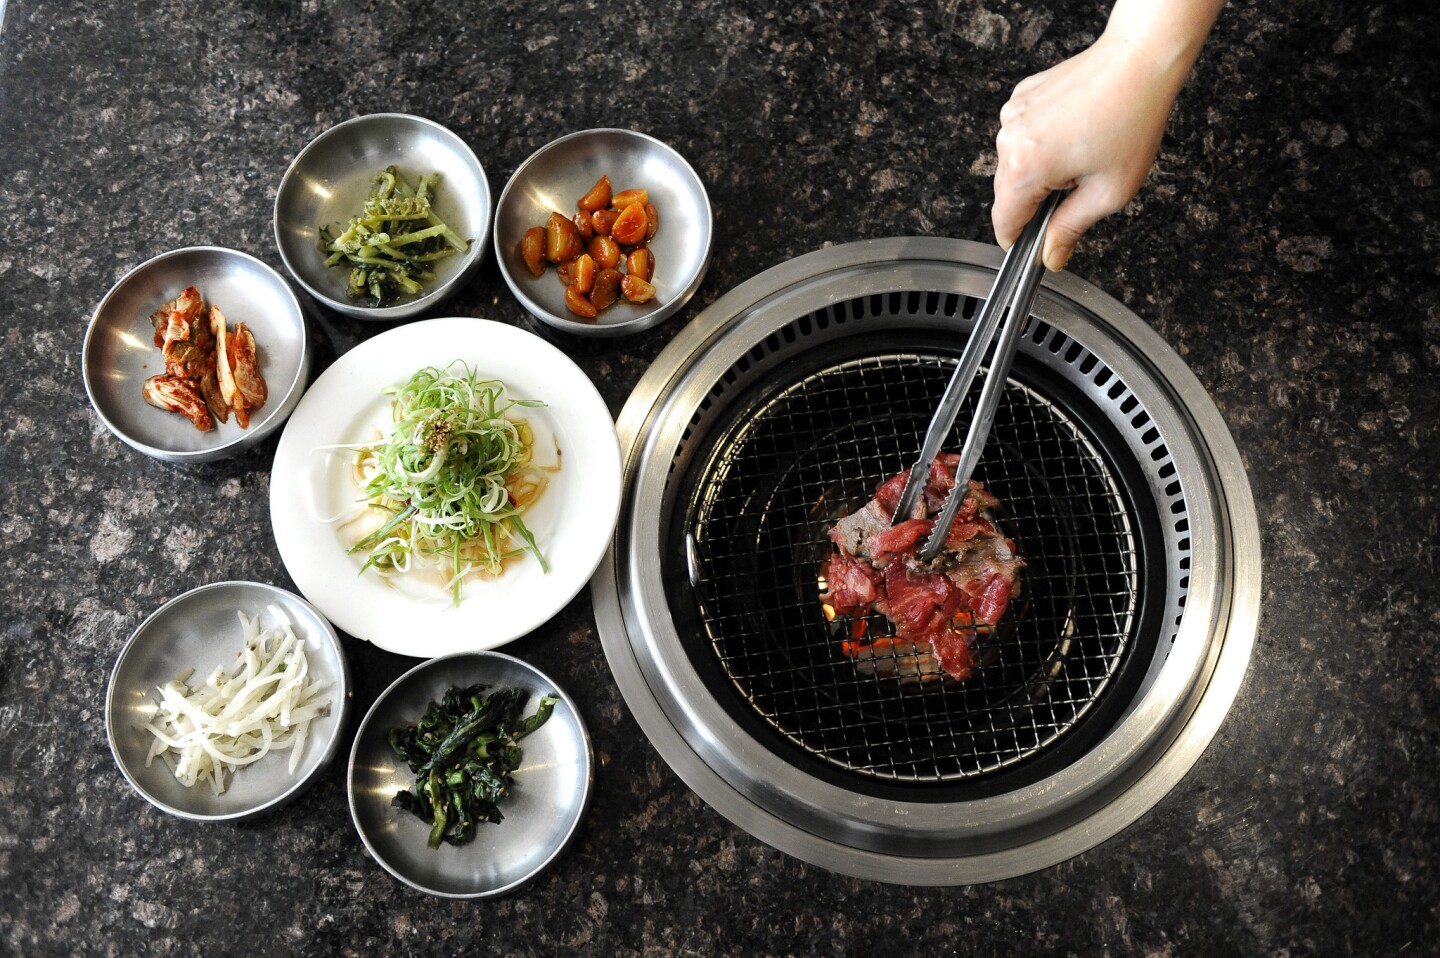 Bulgogi at Gwang Yang BBQ restaurant in Koreatown.